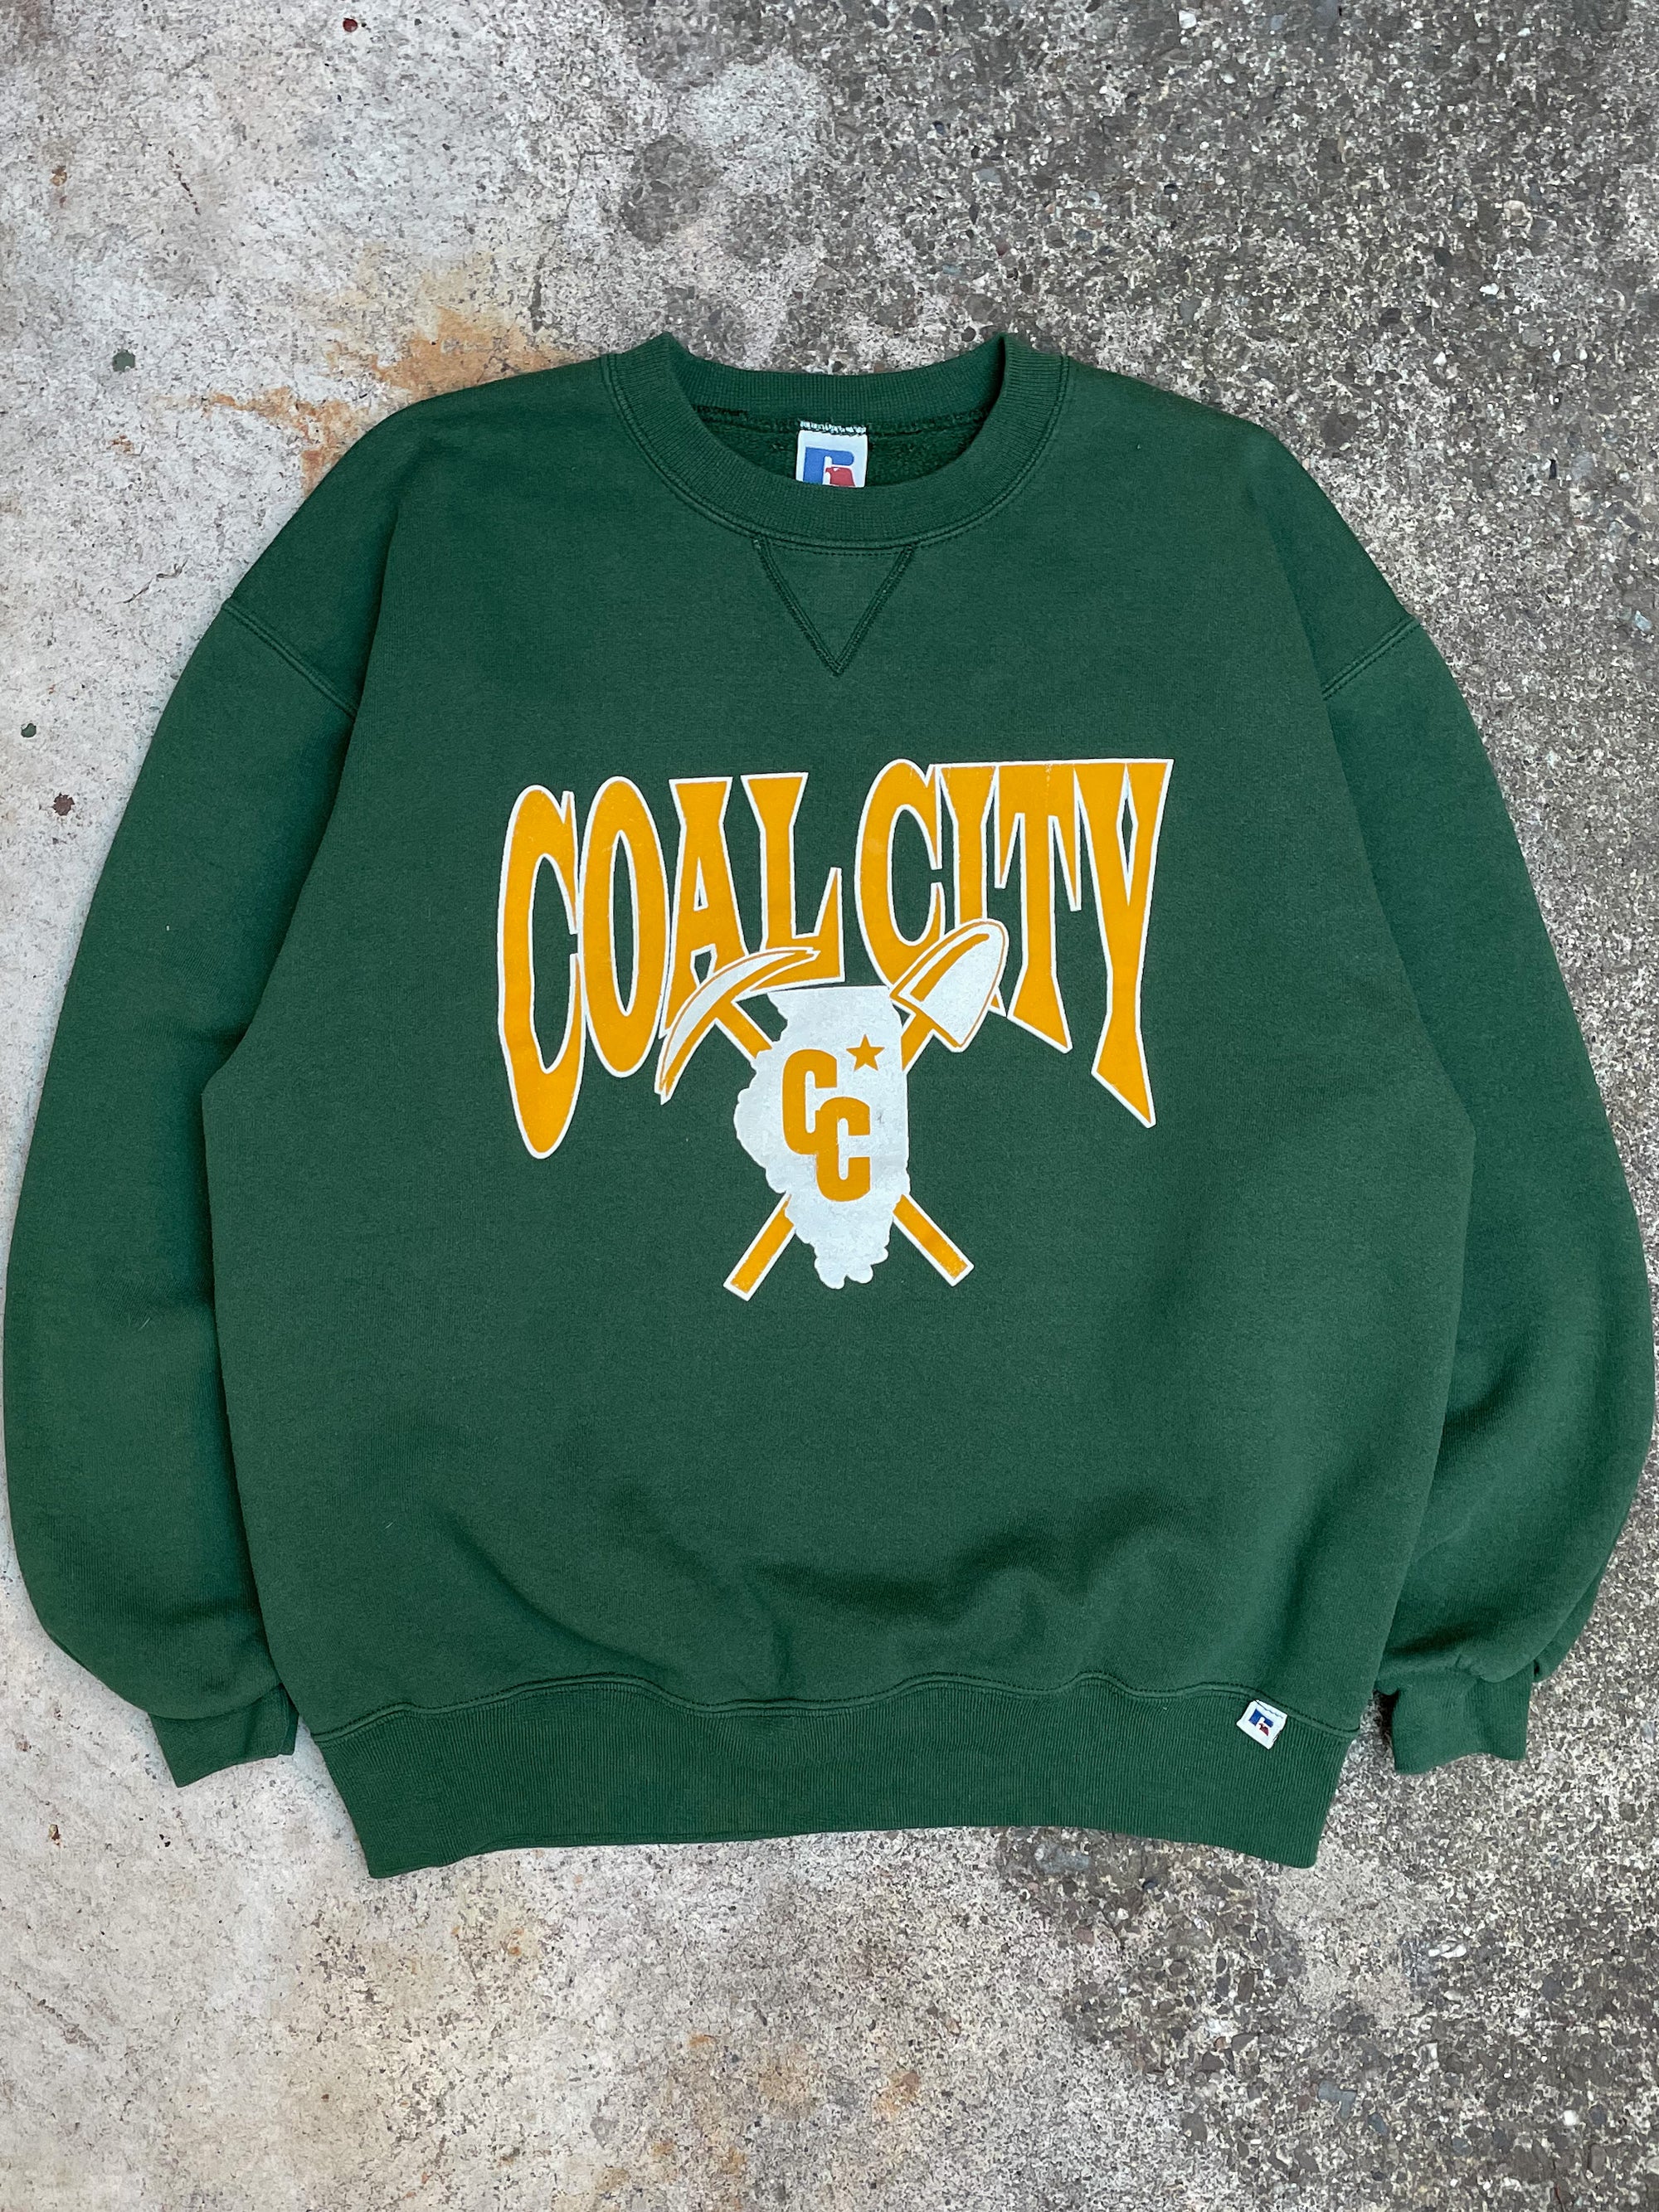 1990s Russell “Coal City” Sweatshirt (L)